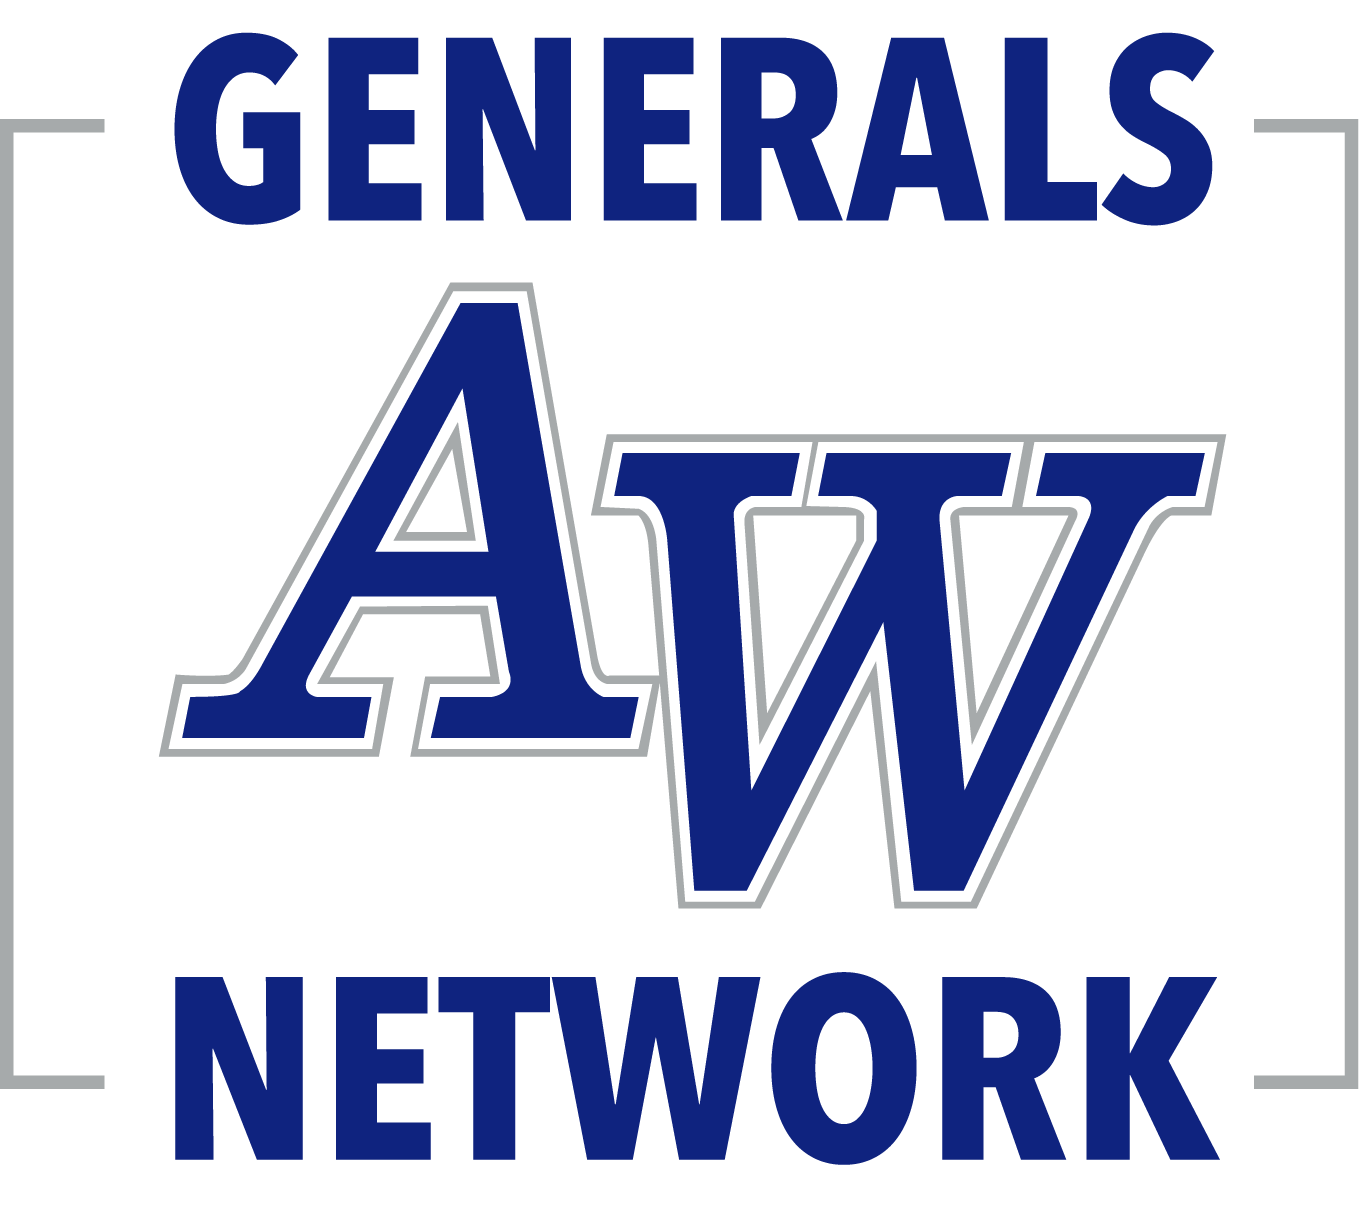 aw generals network